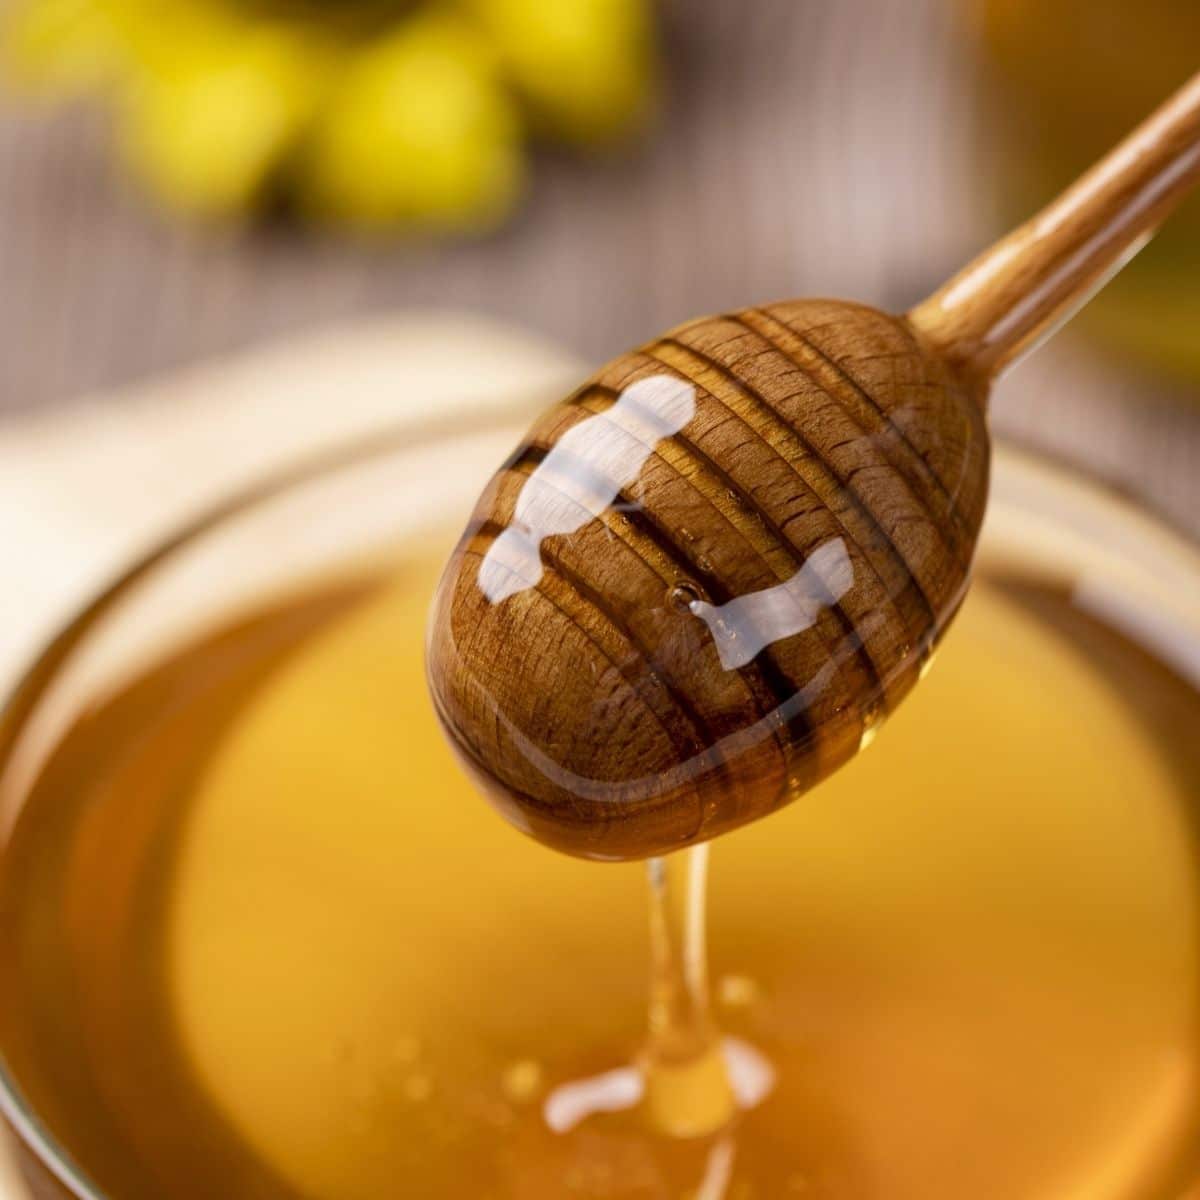 Pilihan pengganti madu dan cara menggunakannya gambar persegi terbaik madu pada gayung sarang lebah.